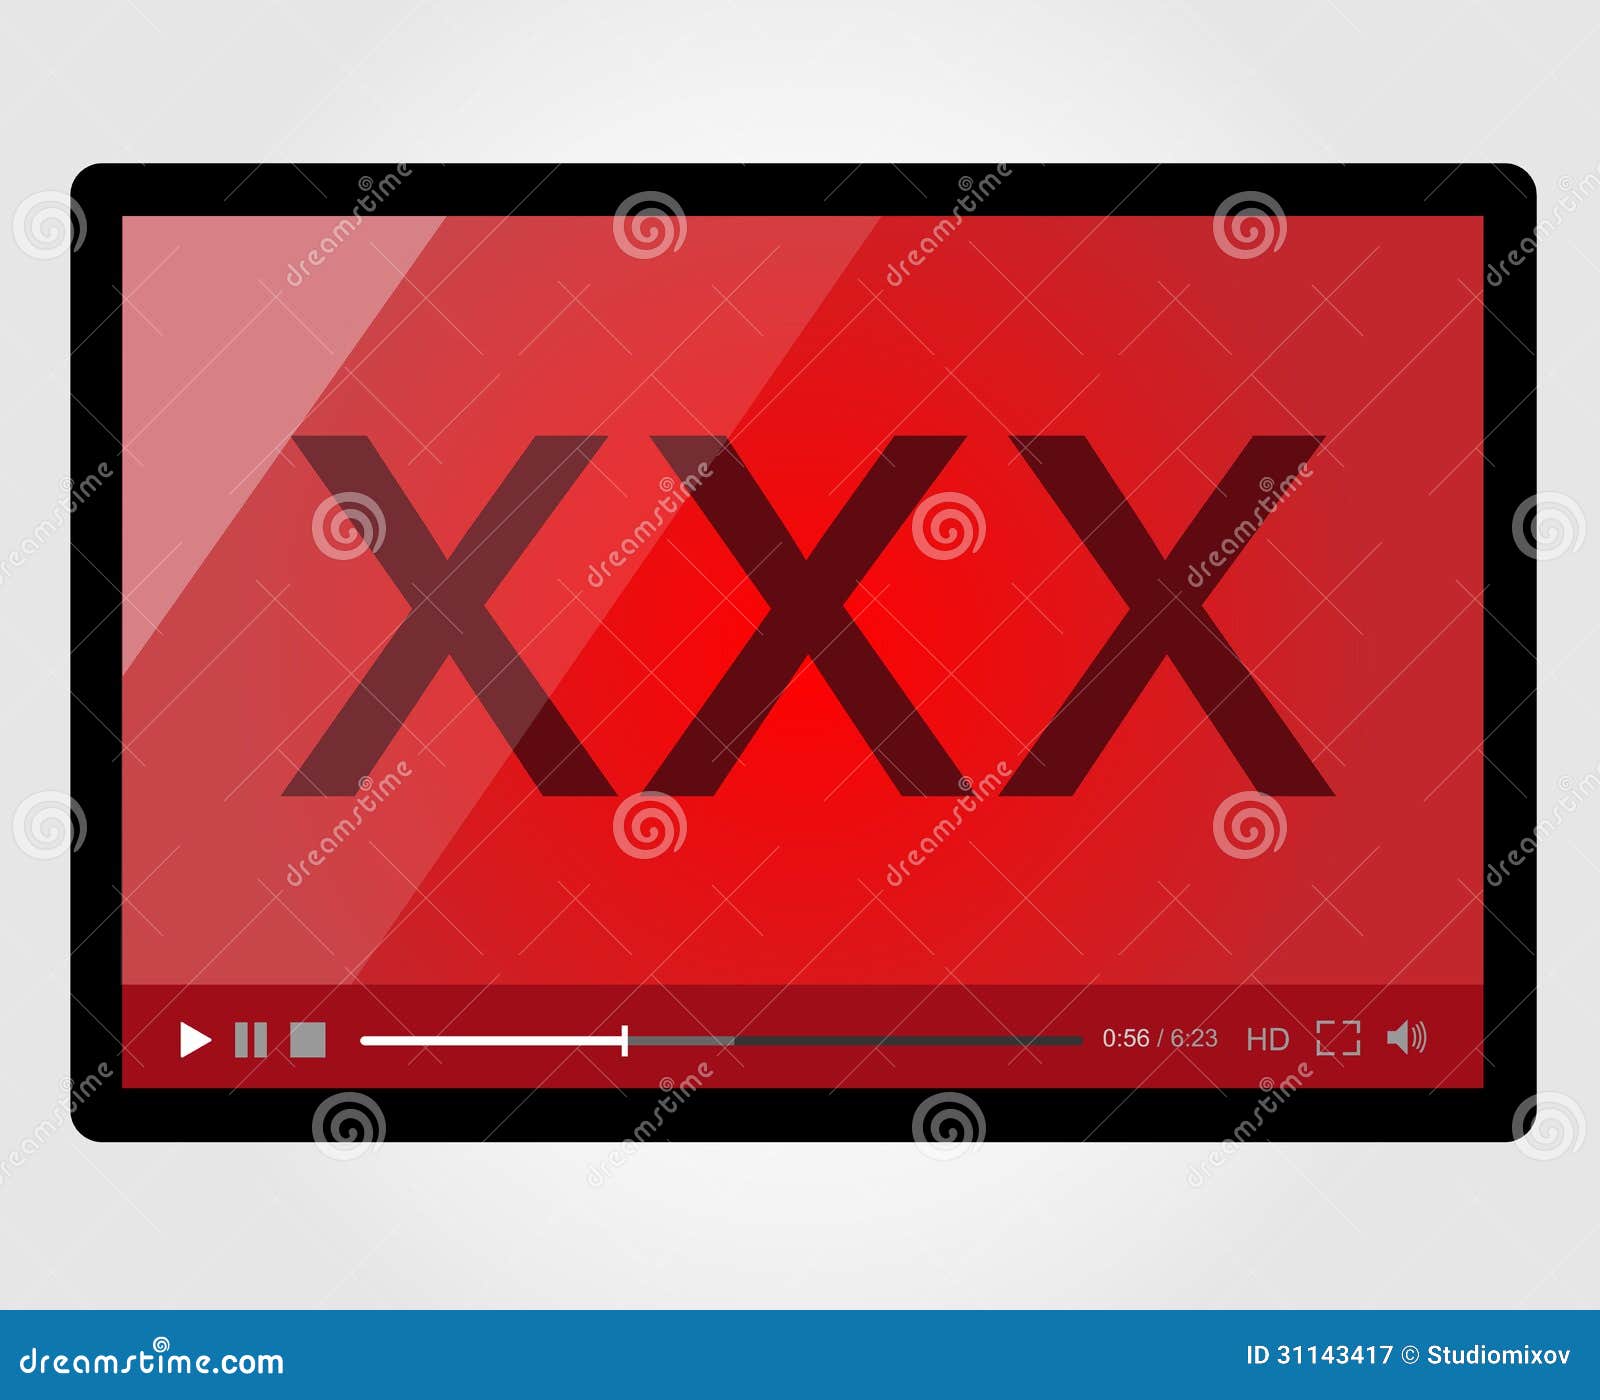 Xxx Adult Free Videos